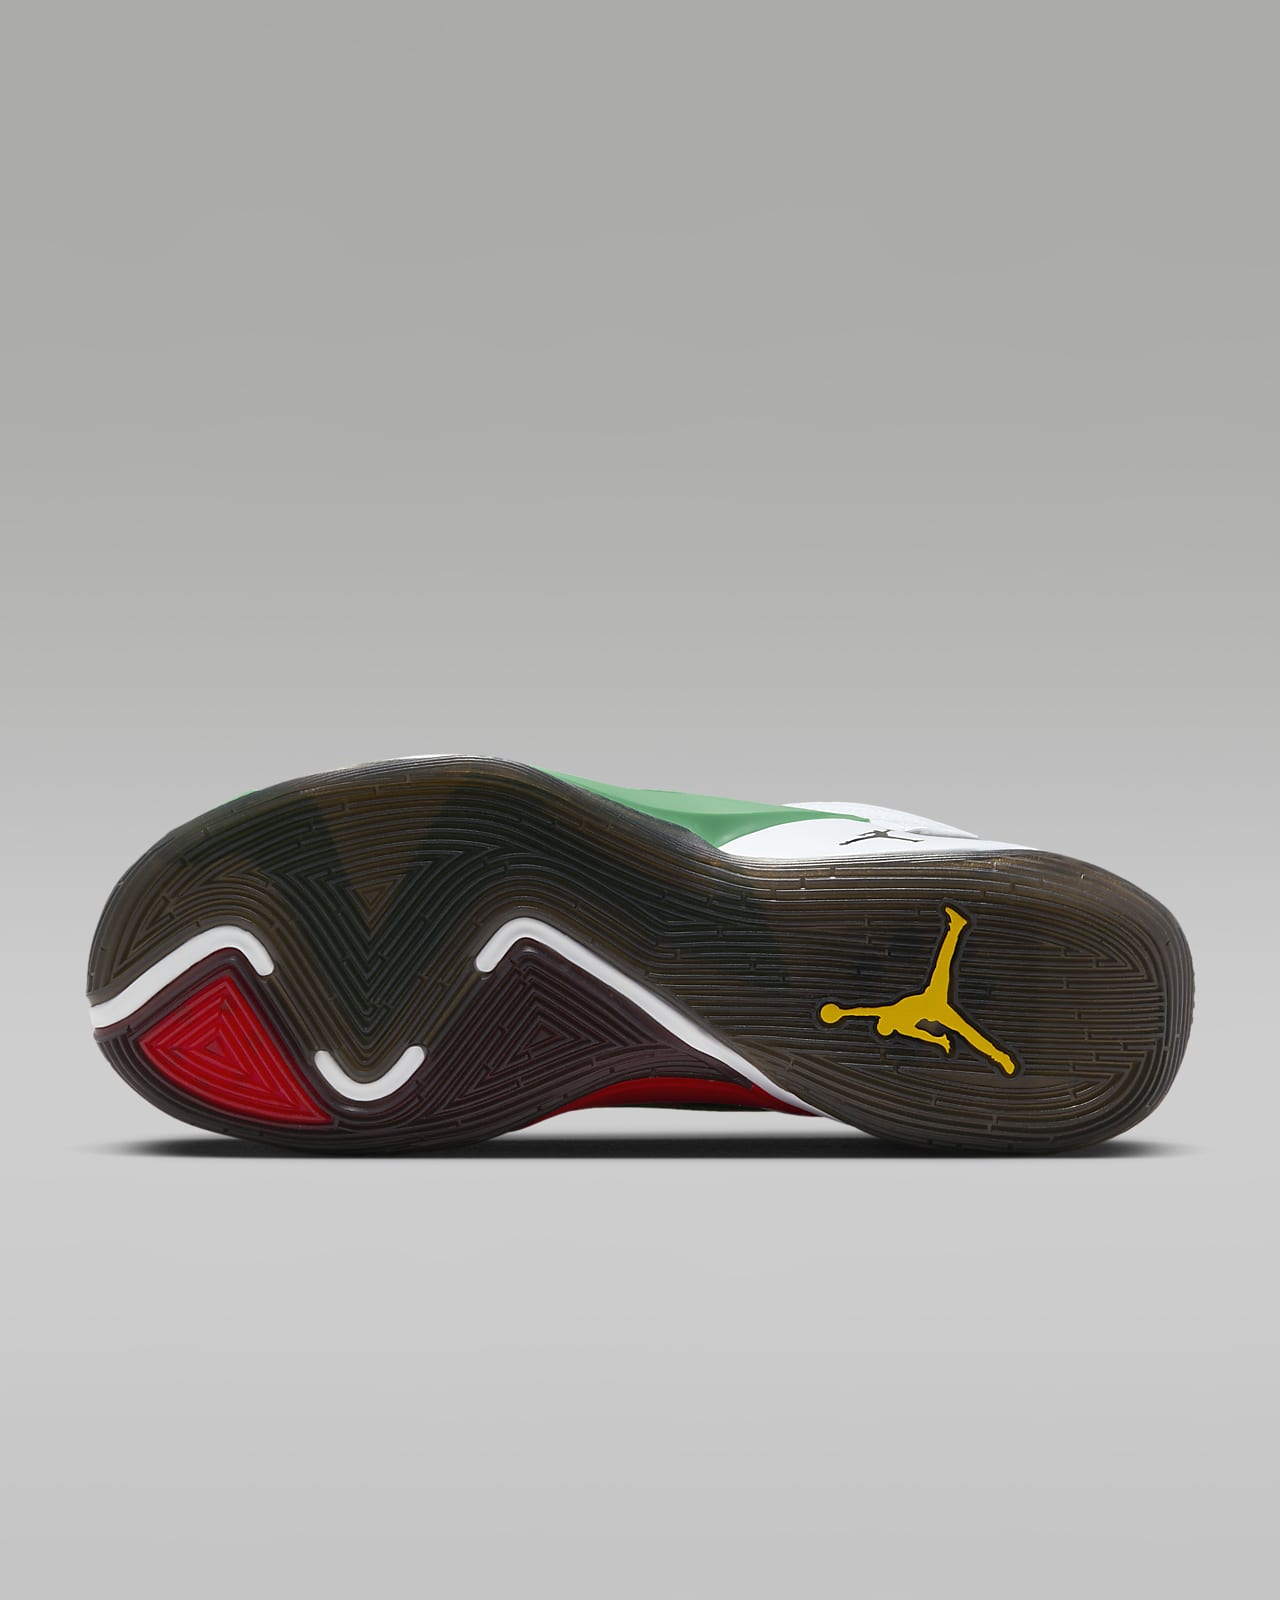 Gold Nike Air Jordan 2 Quai 54 special edition